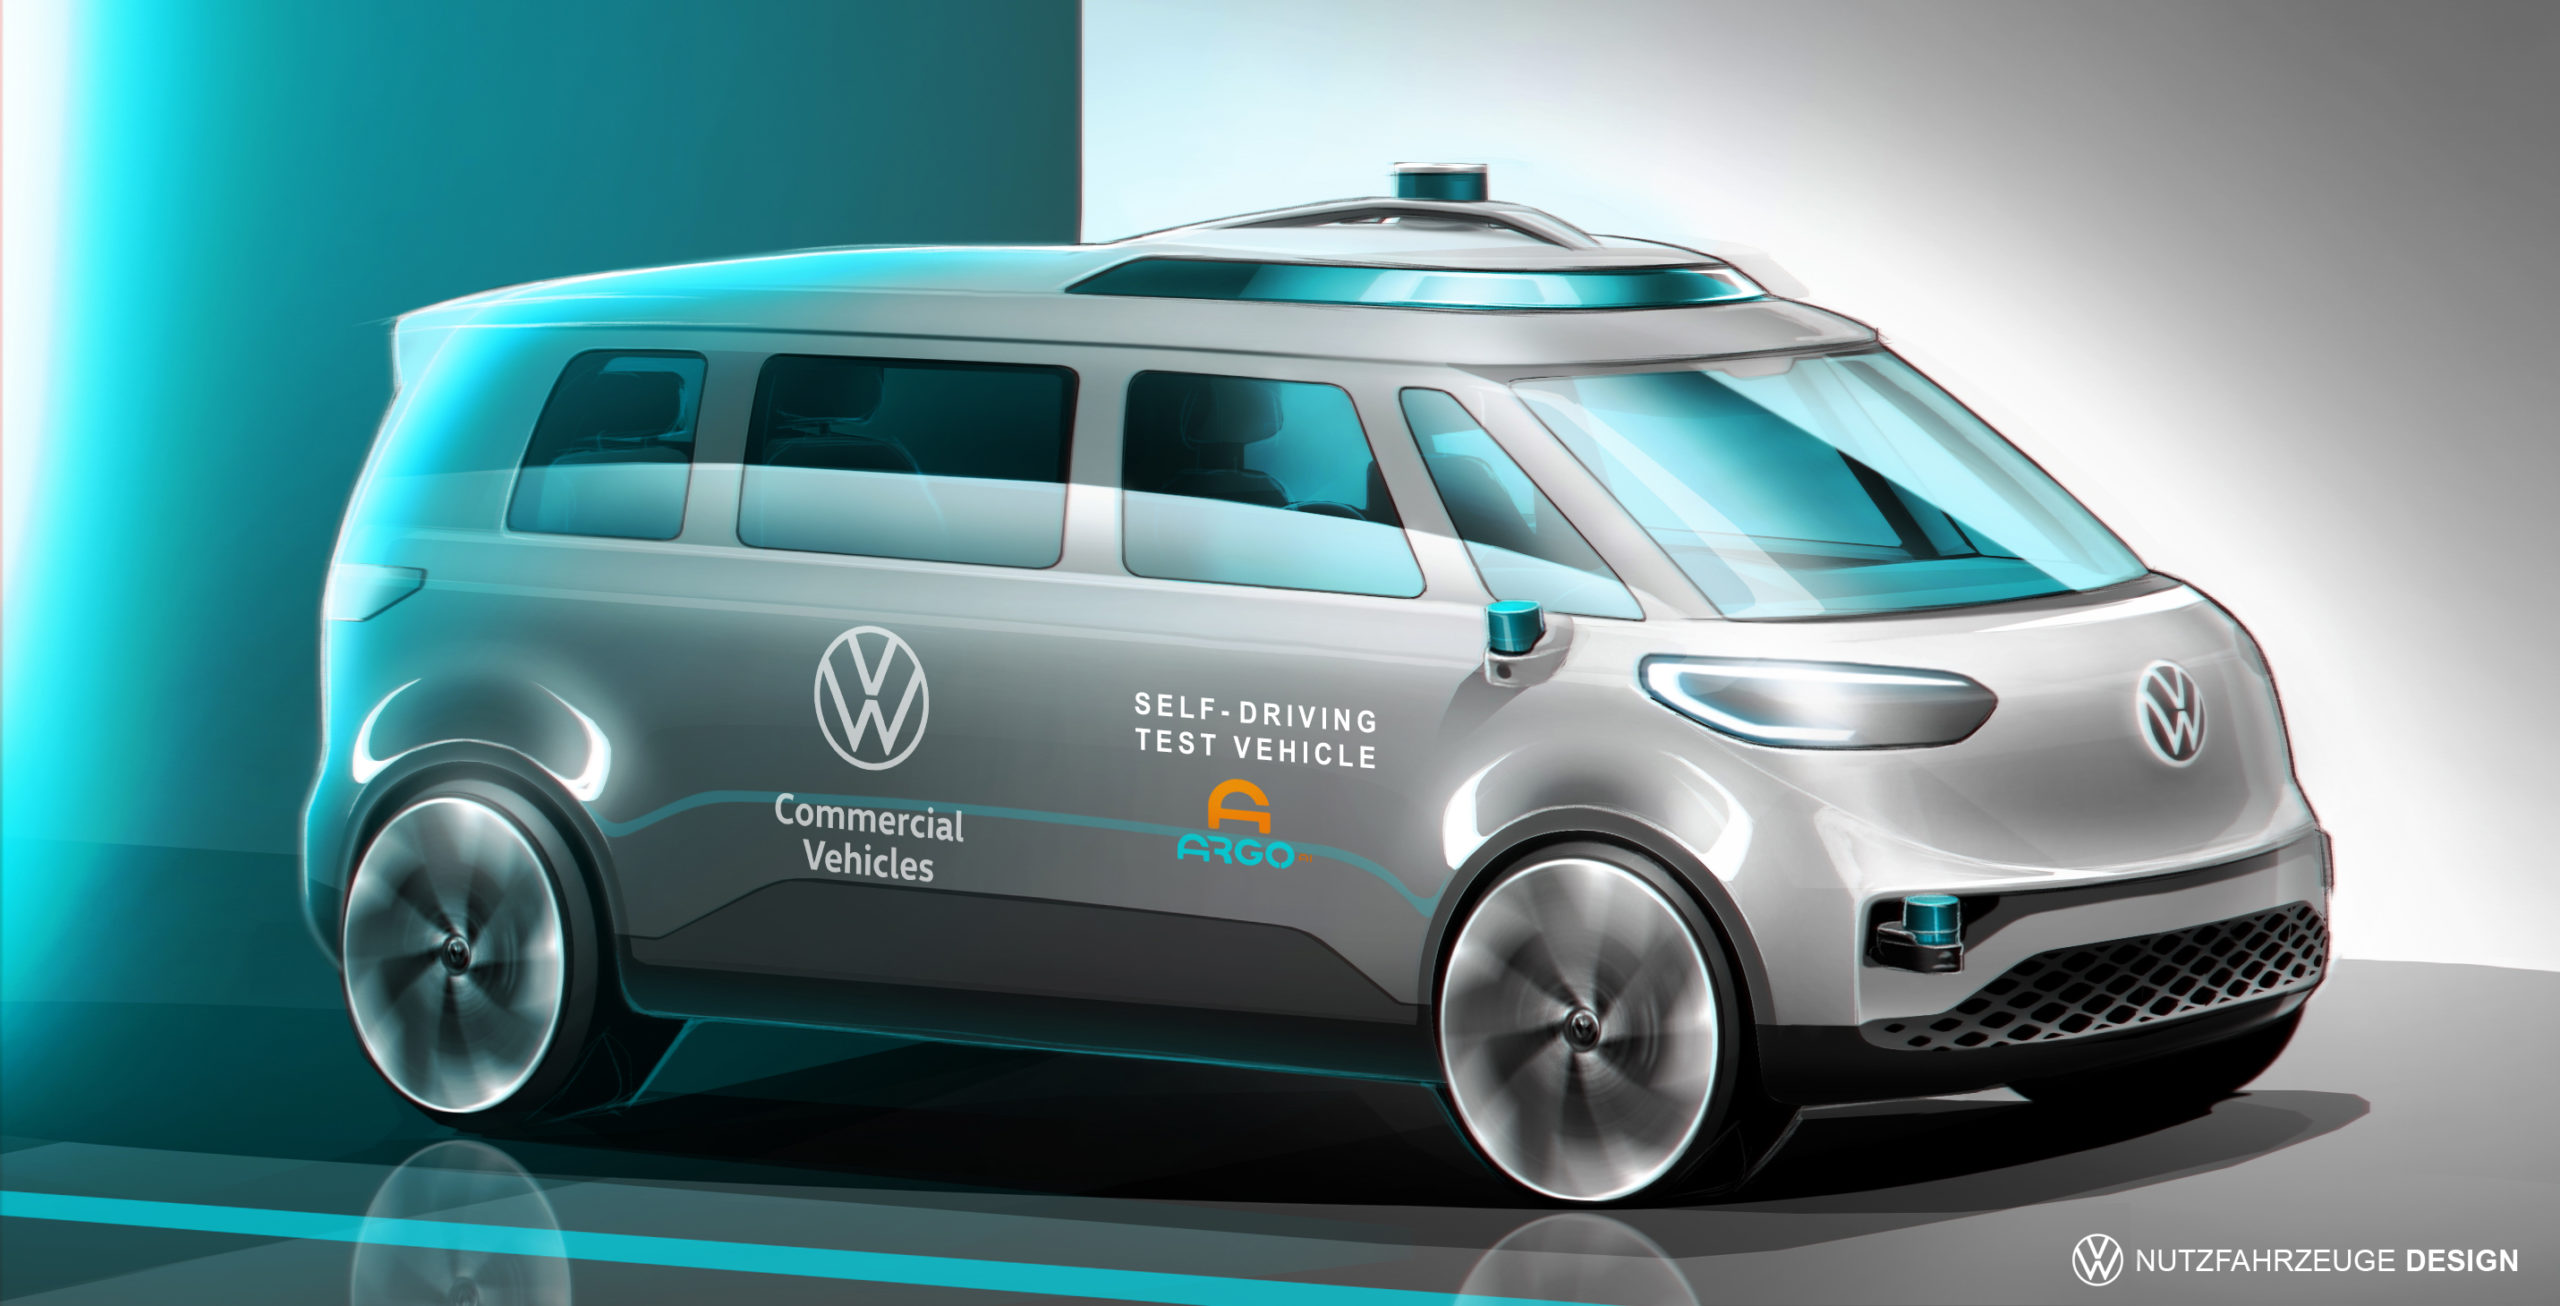 VW Commercial Vehicles moves ahead with autonomous driving